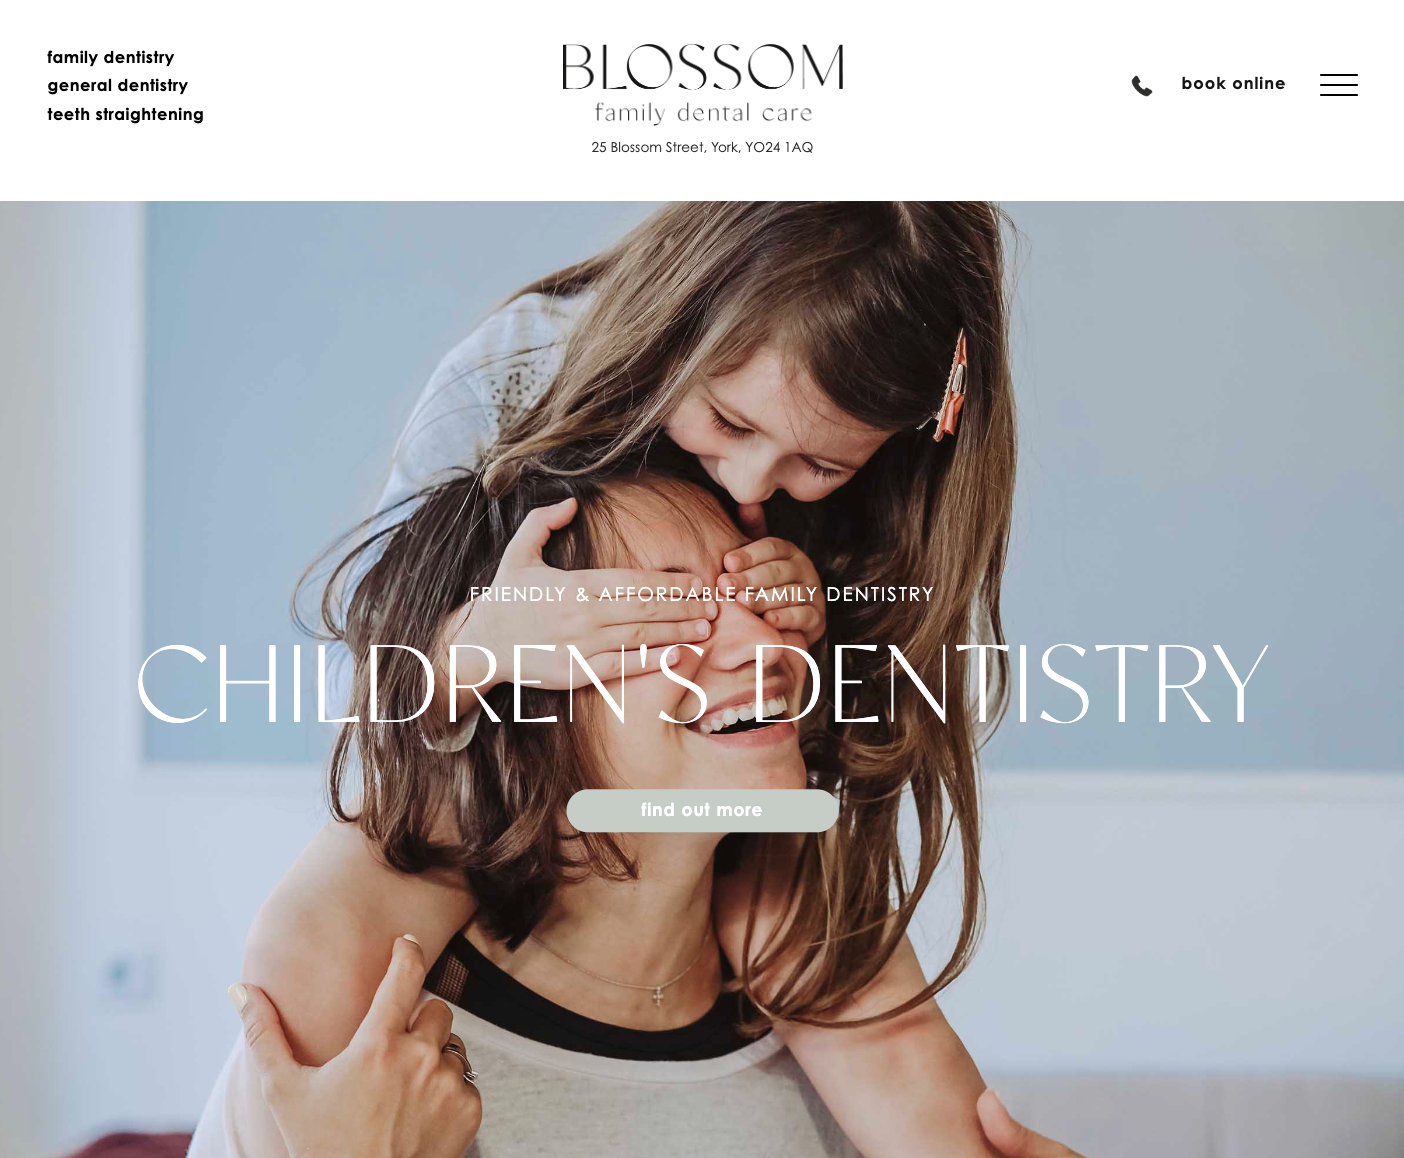 Home screen banner of the blossom dental care website